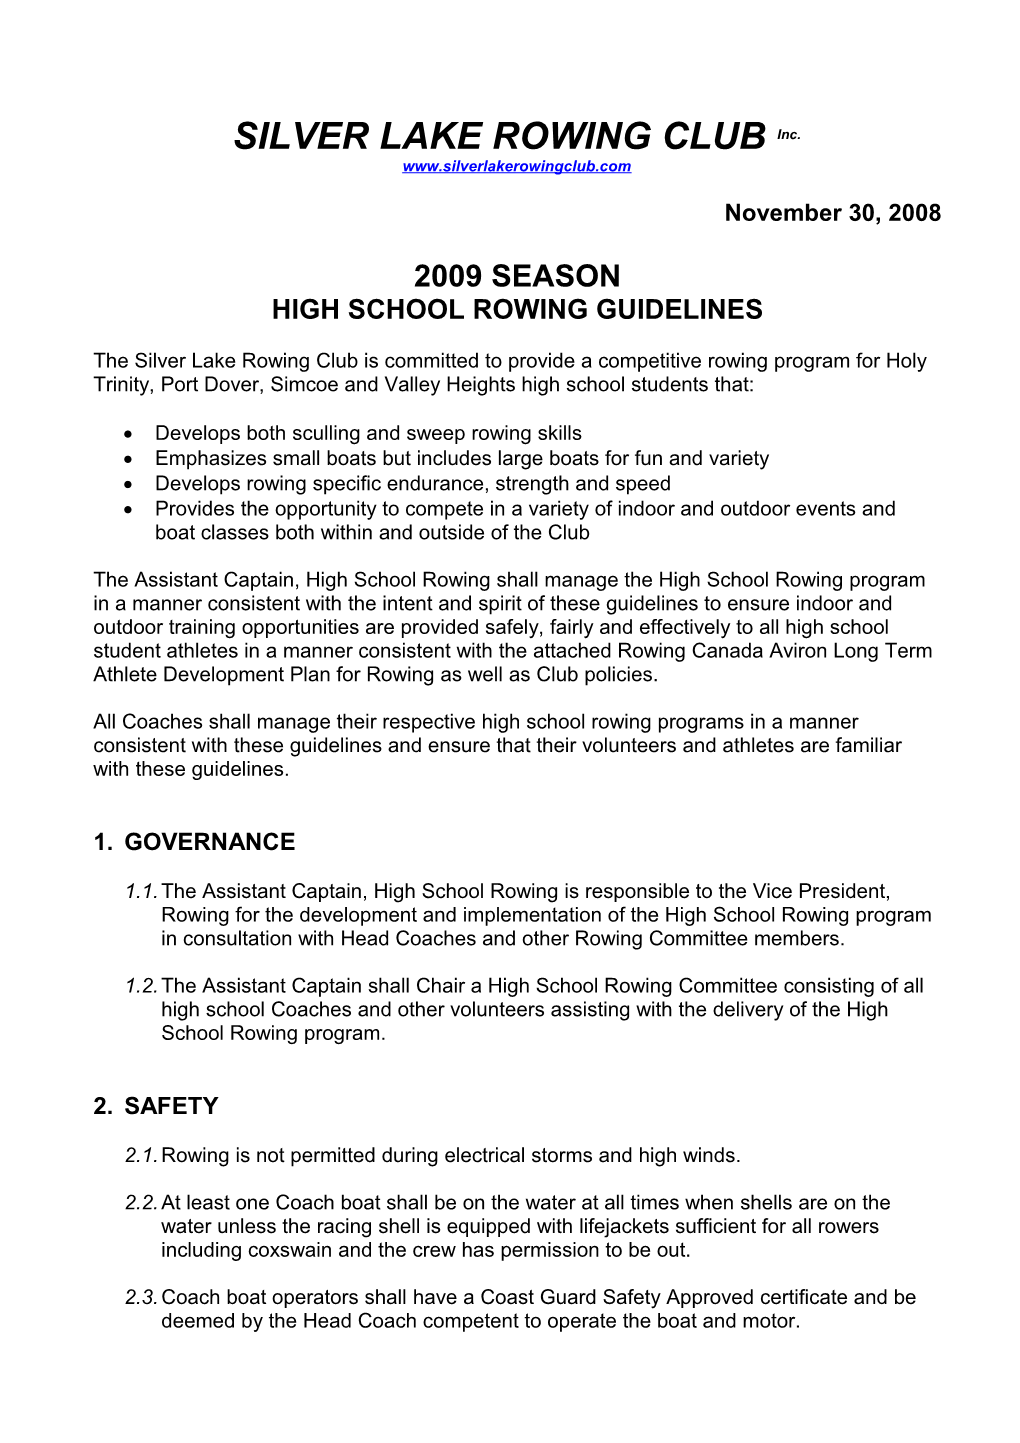 High School Rowing Guidelines